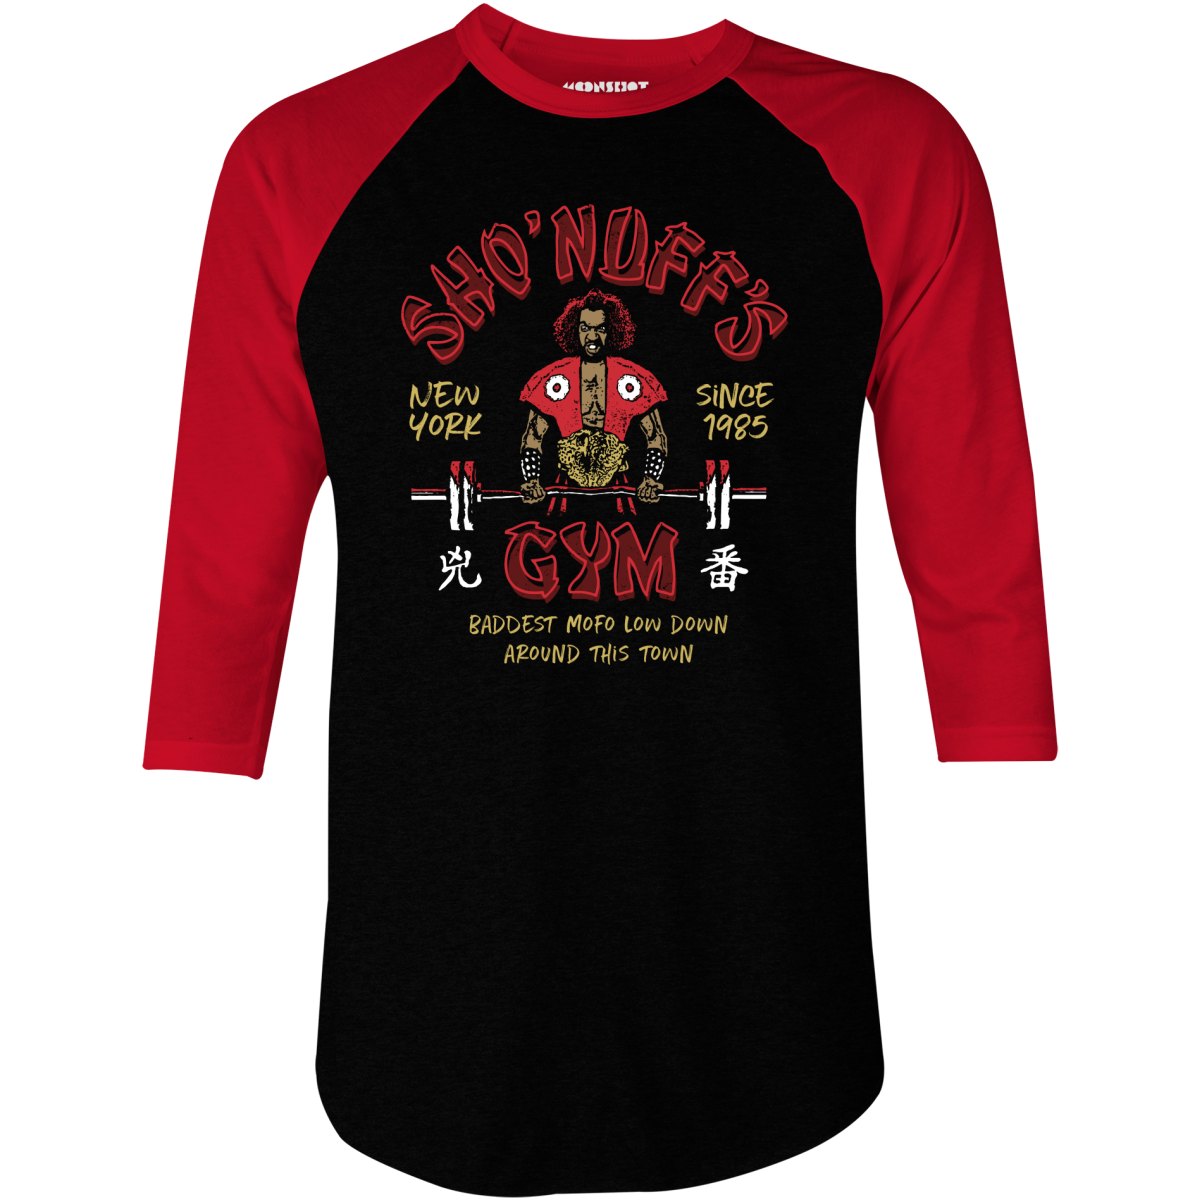 Sho'nuff's Gym - 3/4 Sleeve Raglan T-Shirt